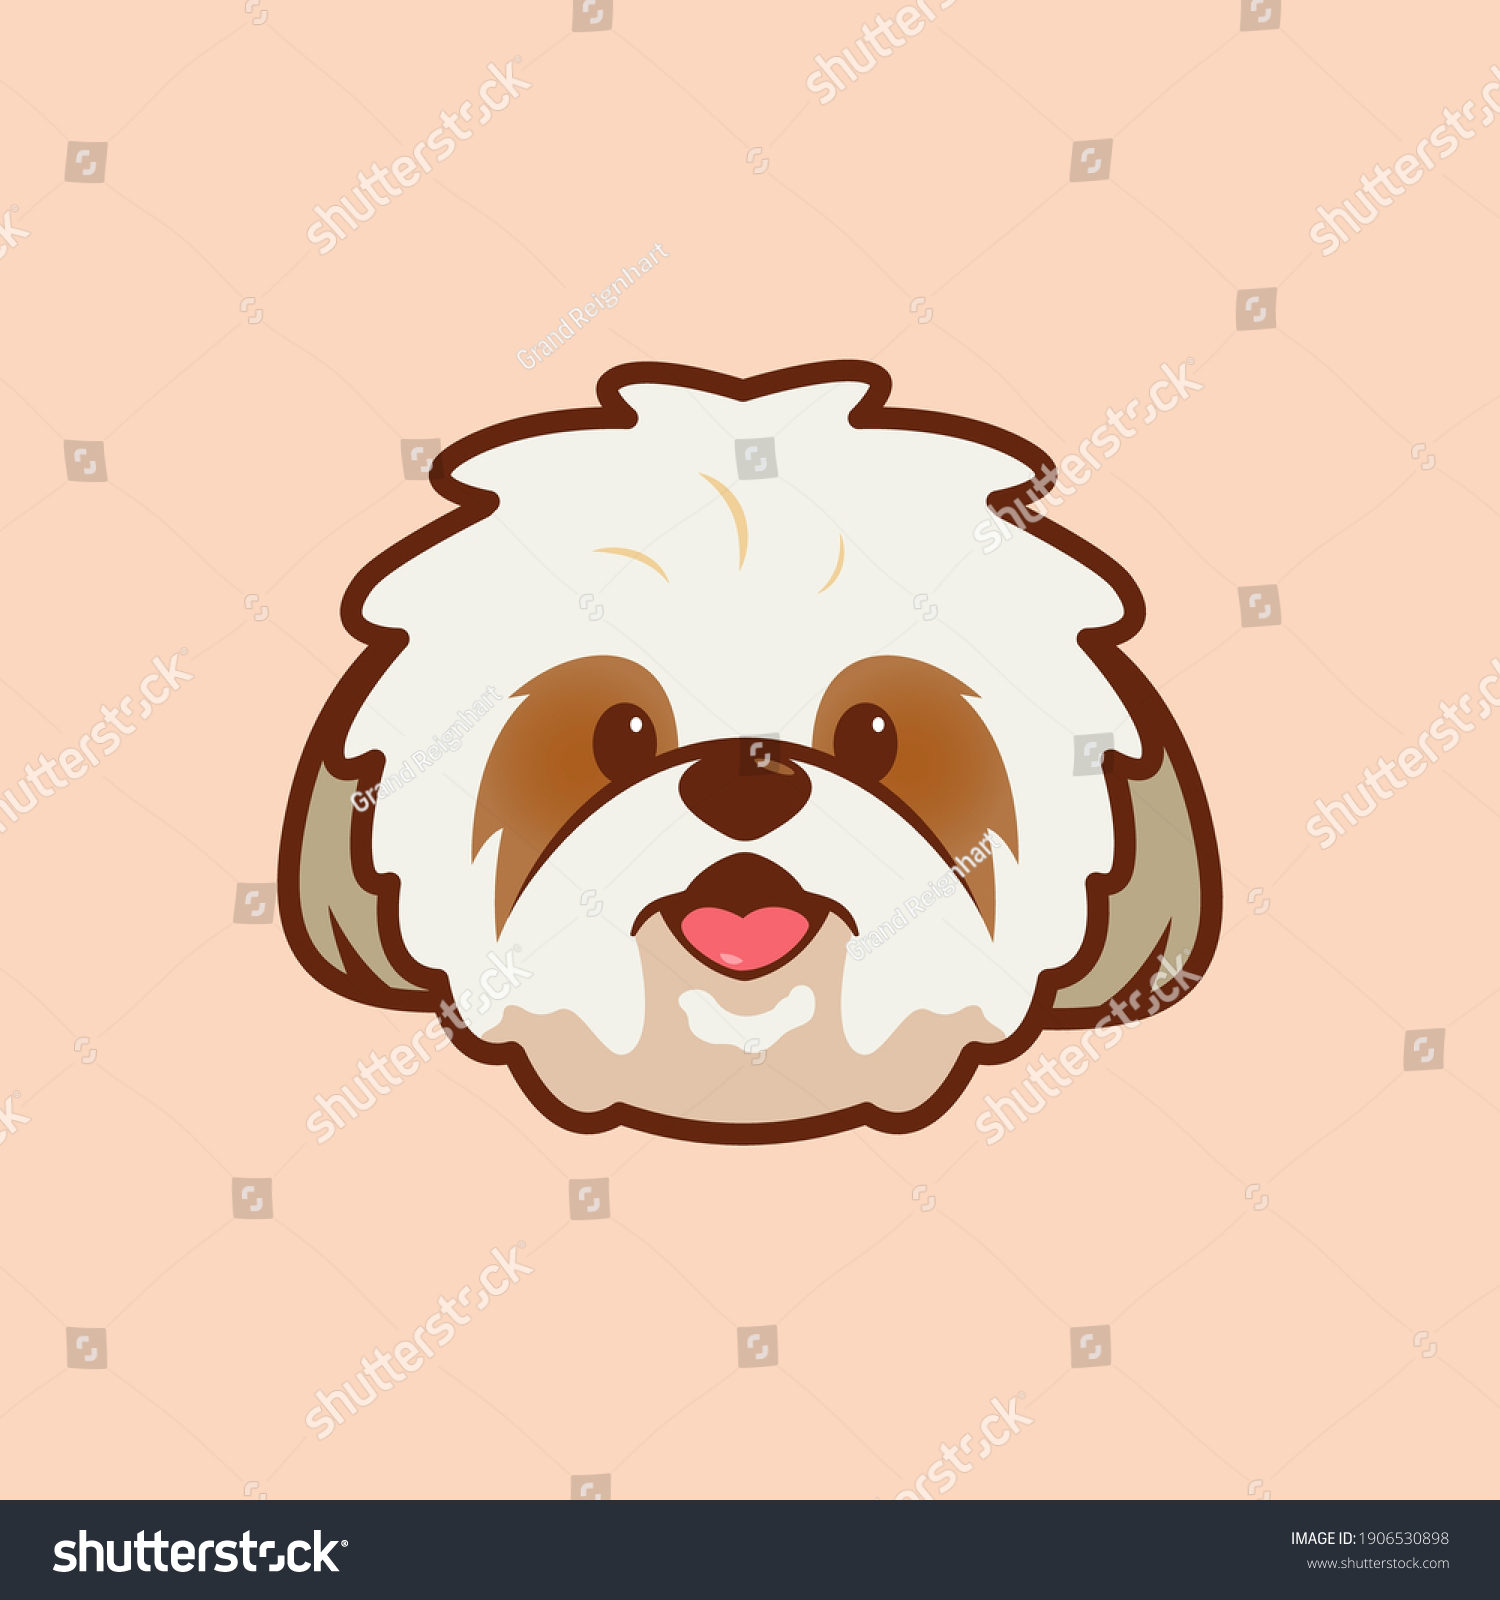 SVG of Cartoon illustration of shih tzu cute face. Vector illustration of shih tzu dog svg